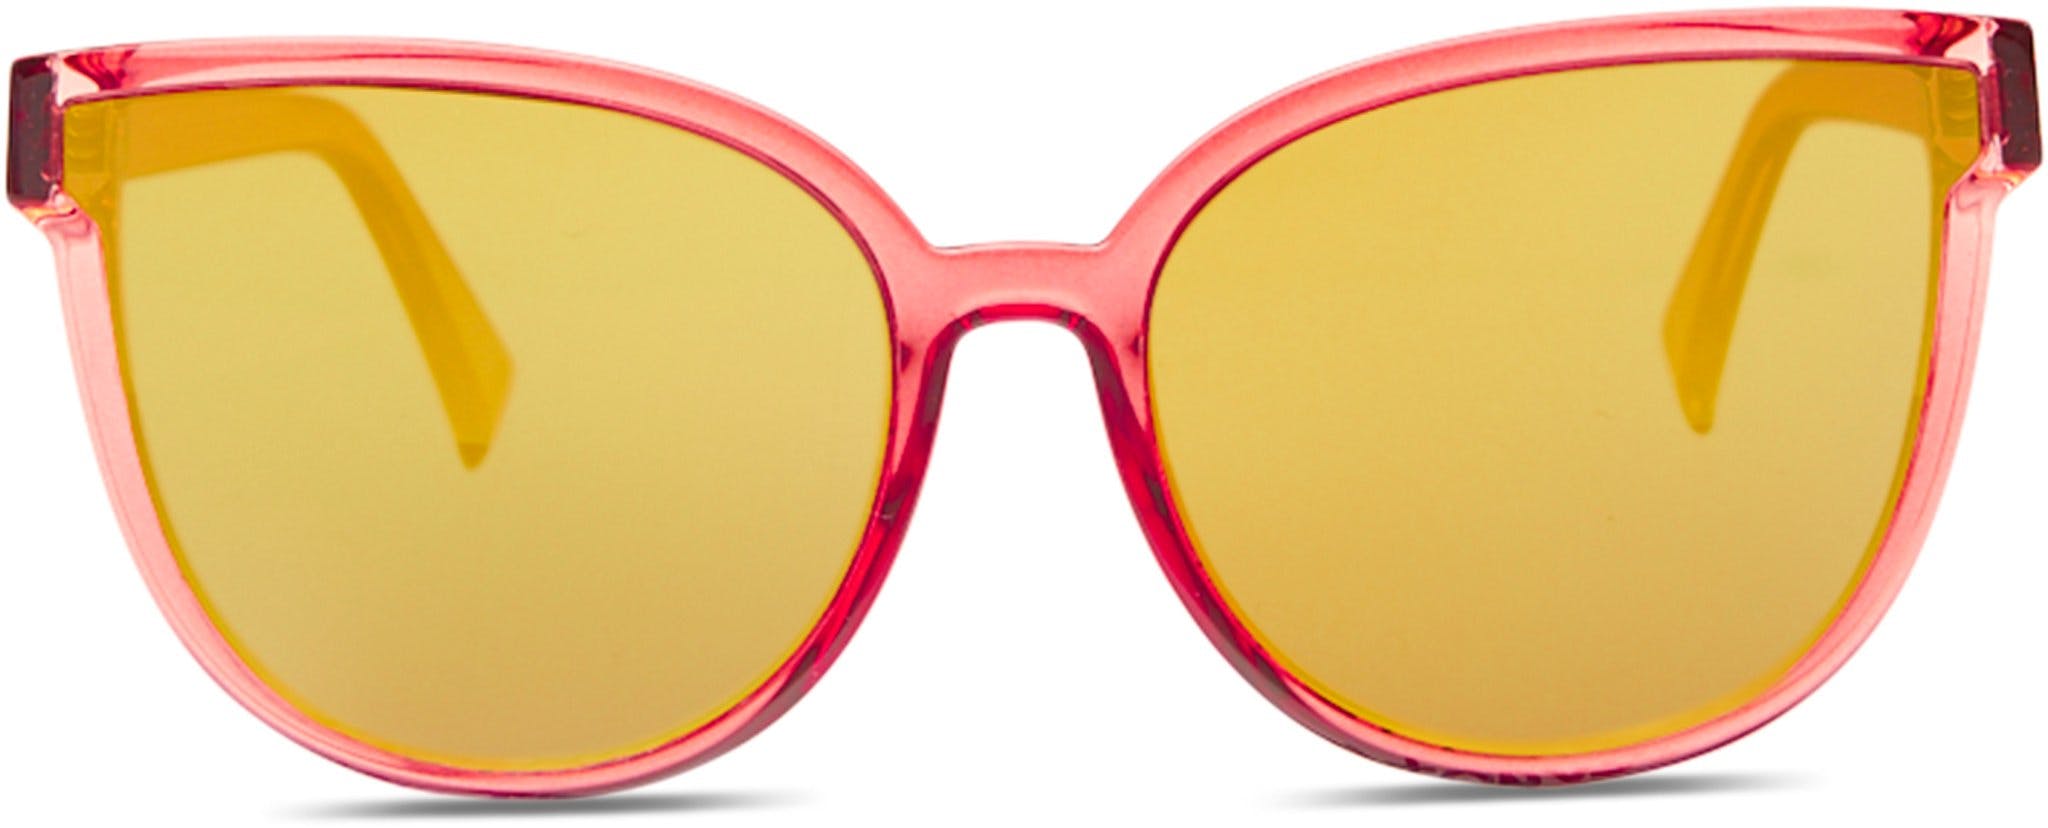 Product image for Fairchild Chrome Sunglasses - Unisex